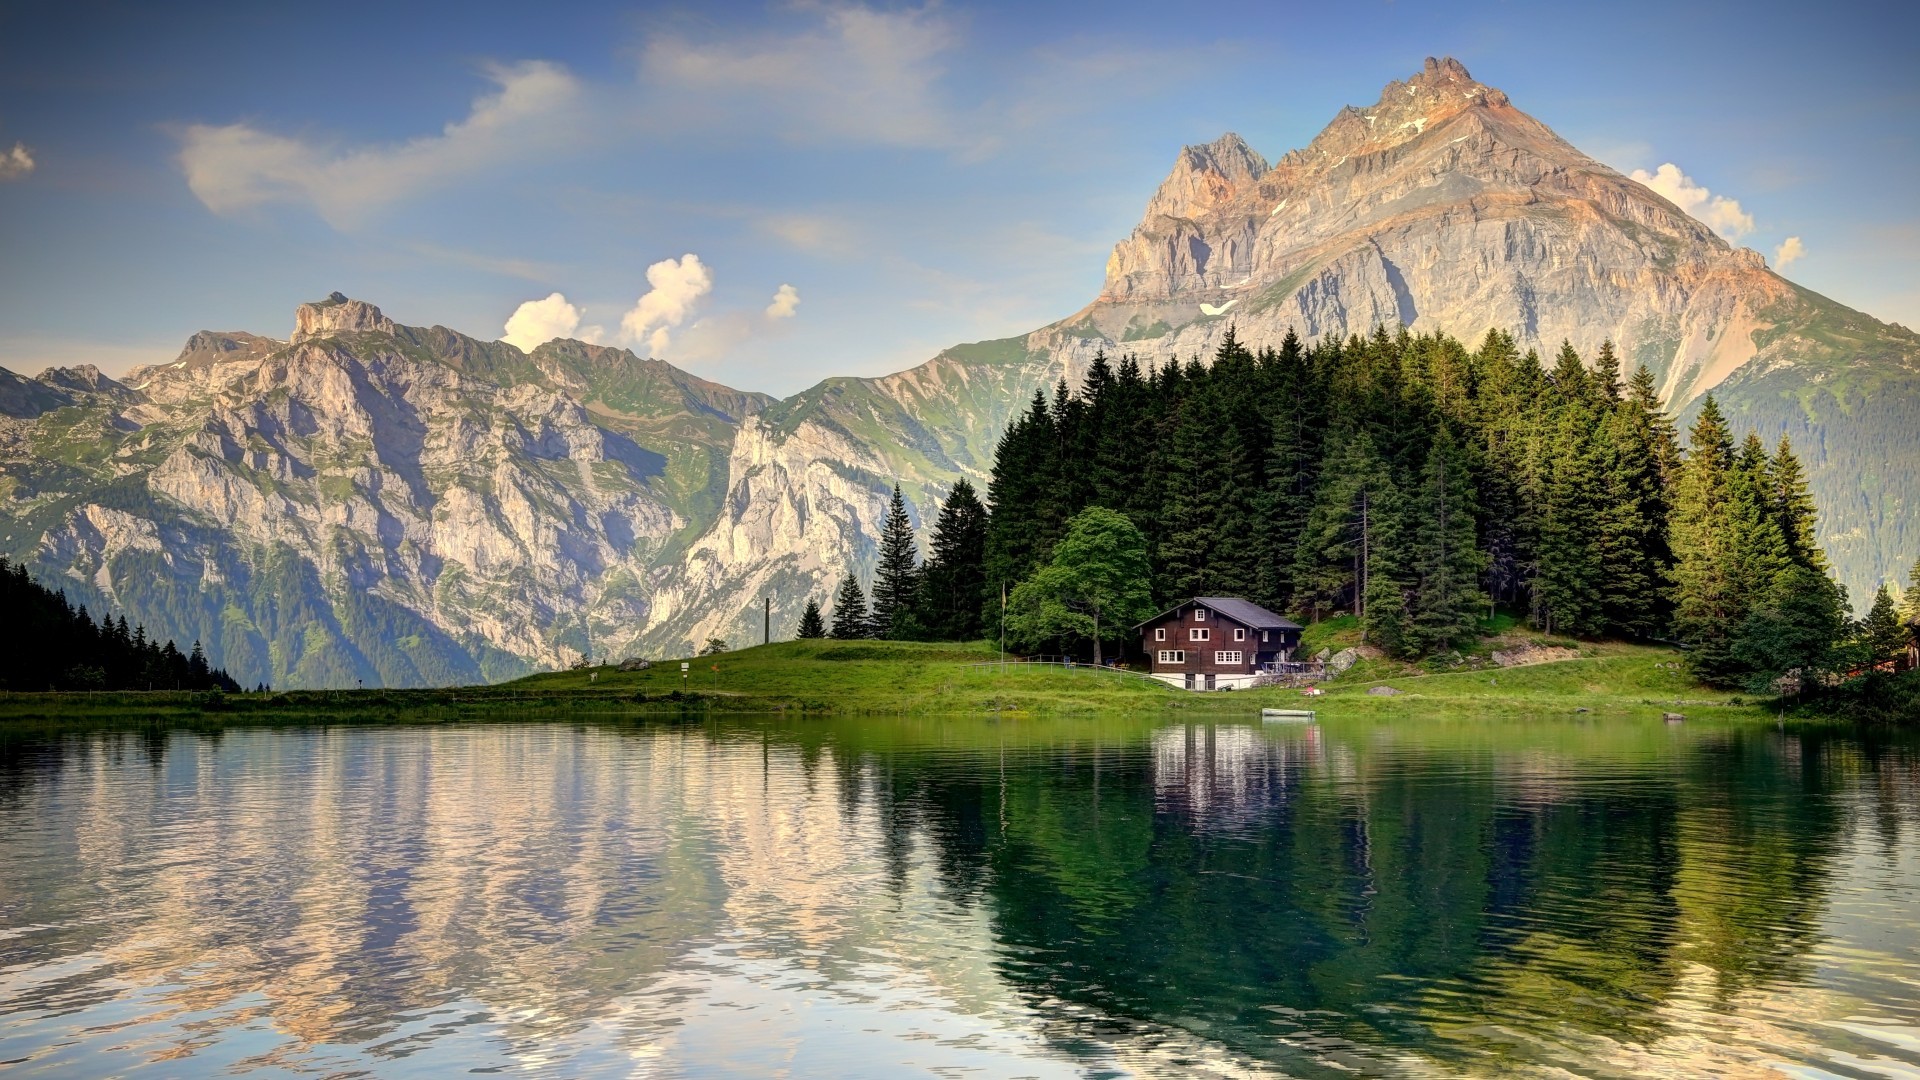 General 1920x1080 landscape Swiss Alps mountains lake cottage Switzerland reflection house nature